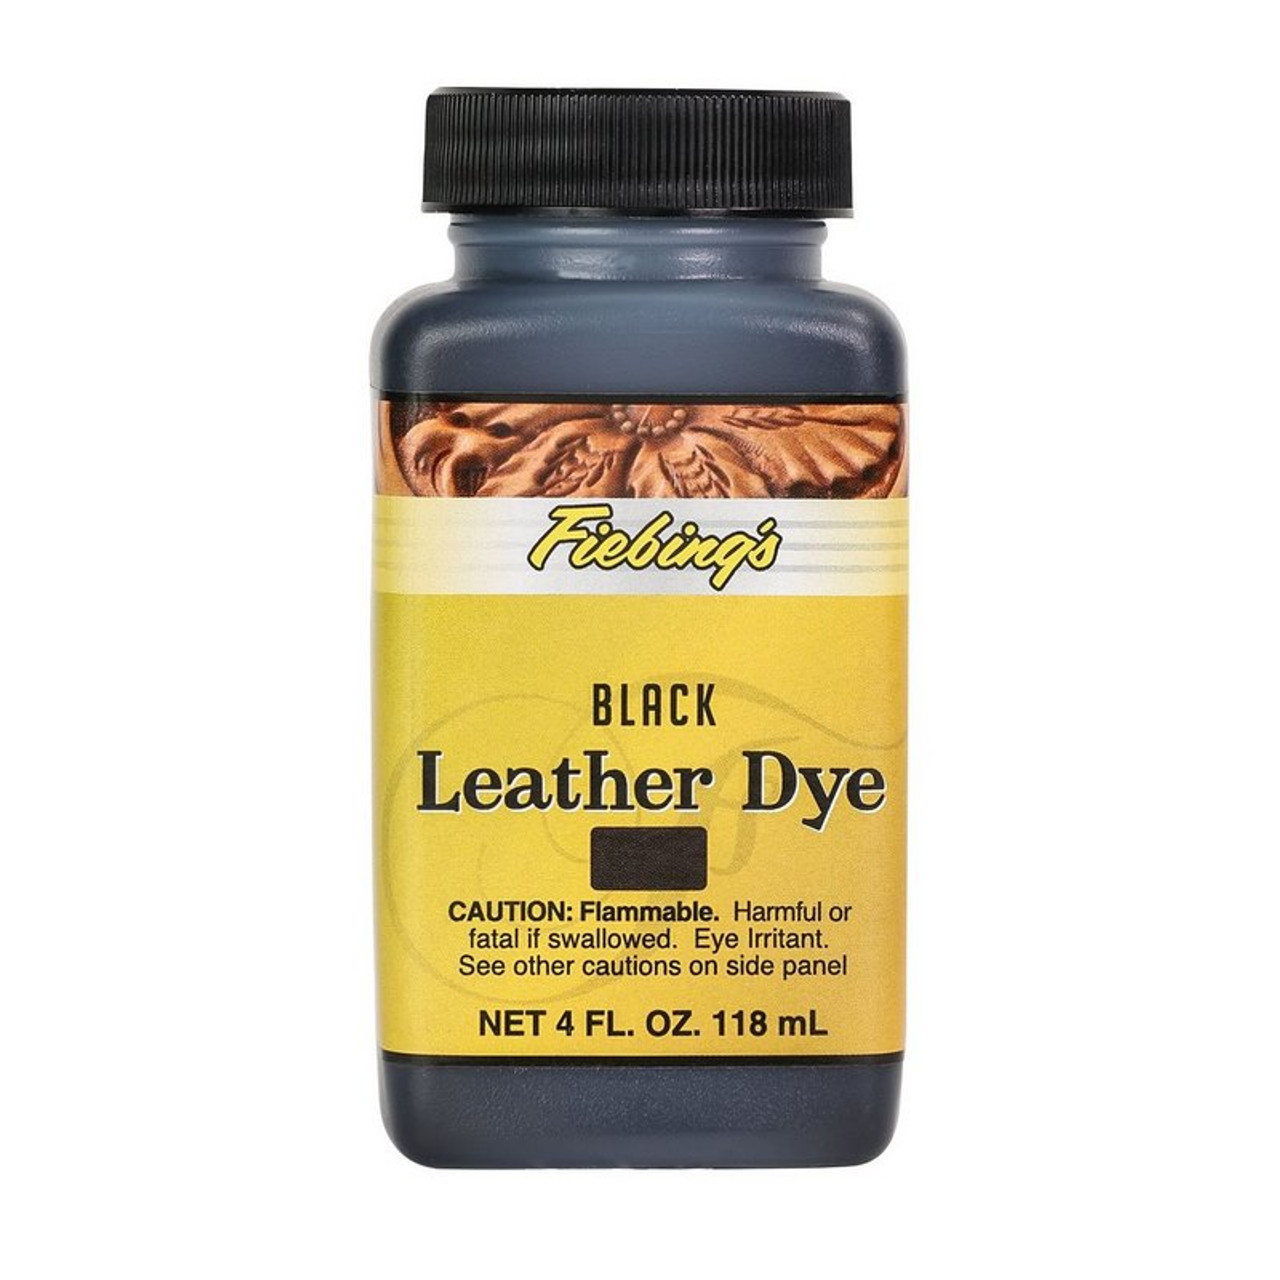 Fiebing's Leather Dye Dark Brown 4 oz.